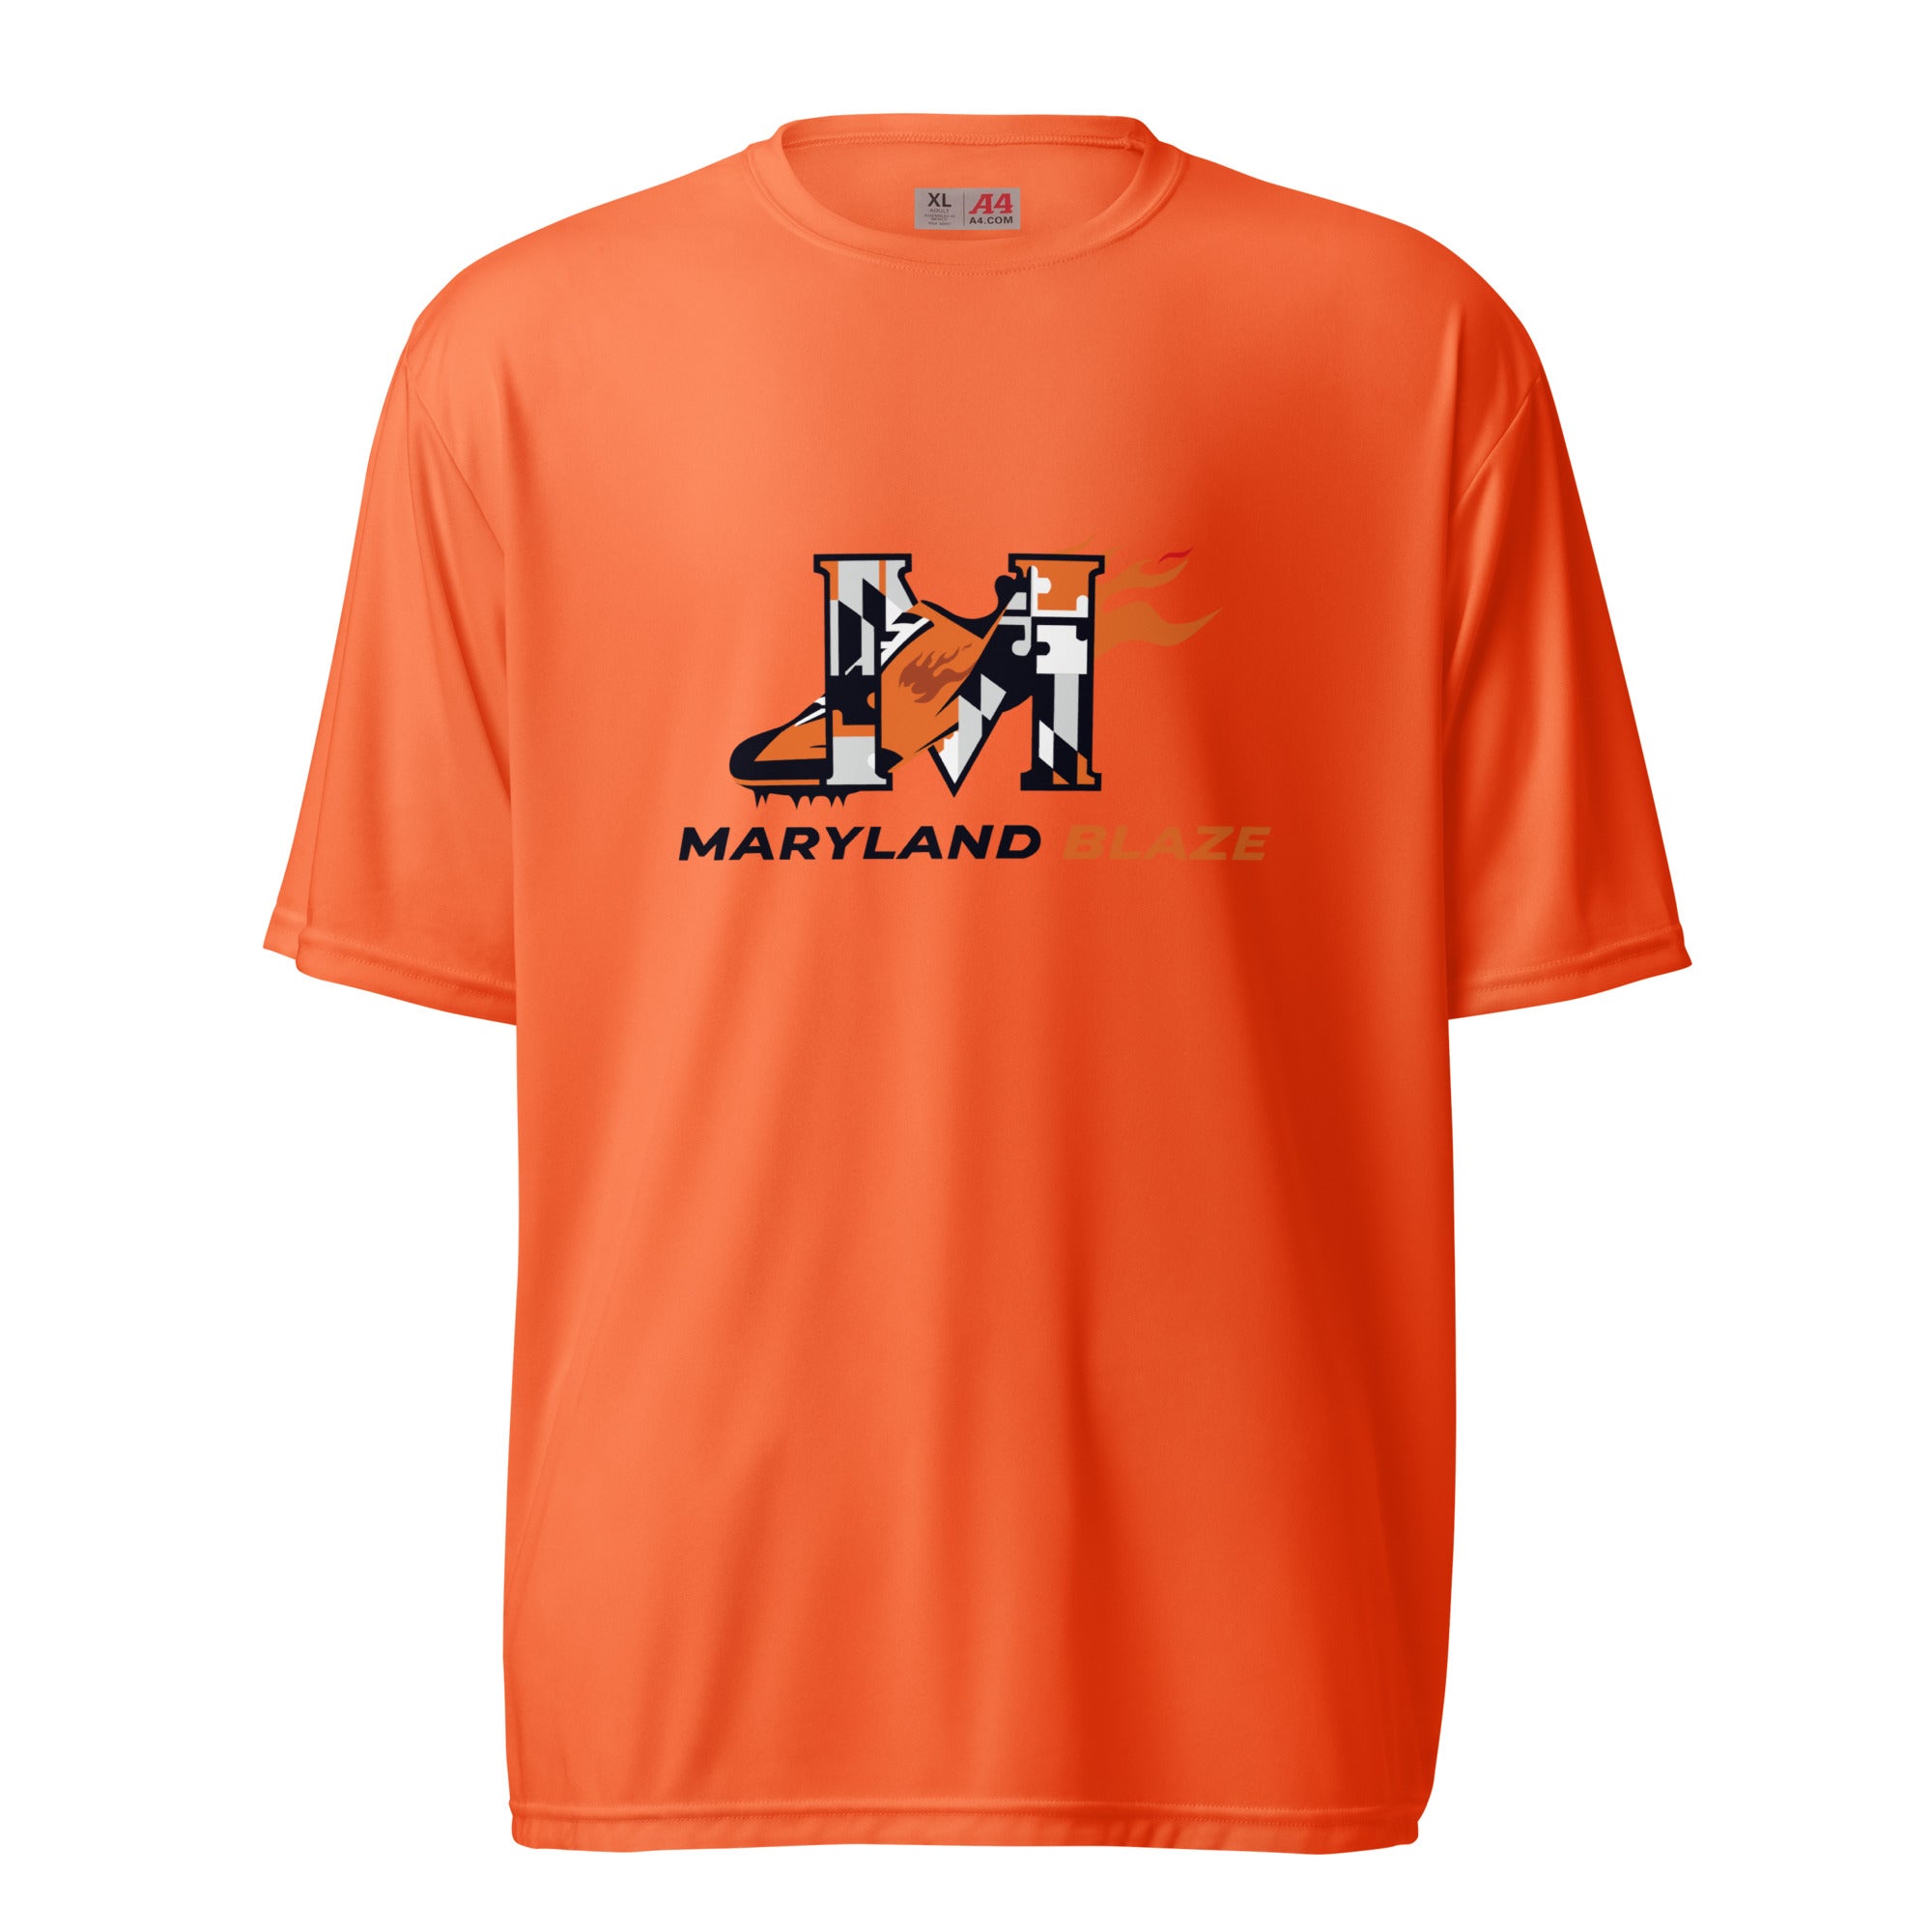 Maryland Blaze Unisex performance crew neck t-shirt